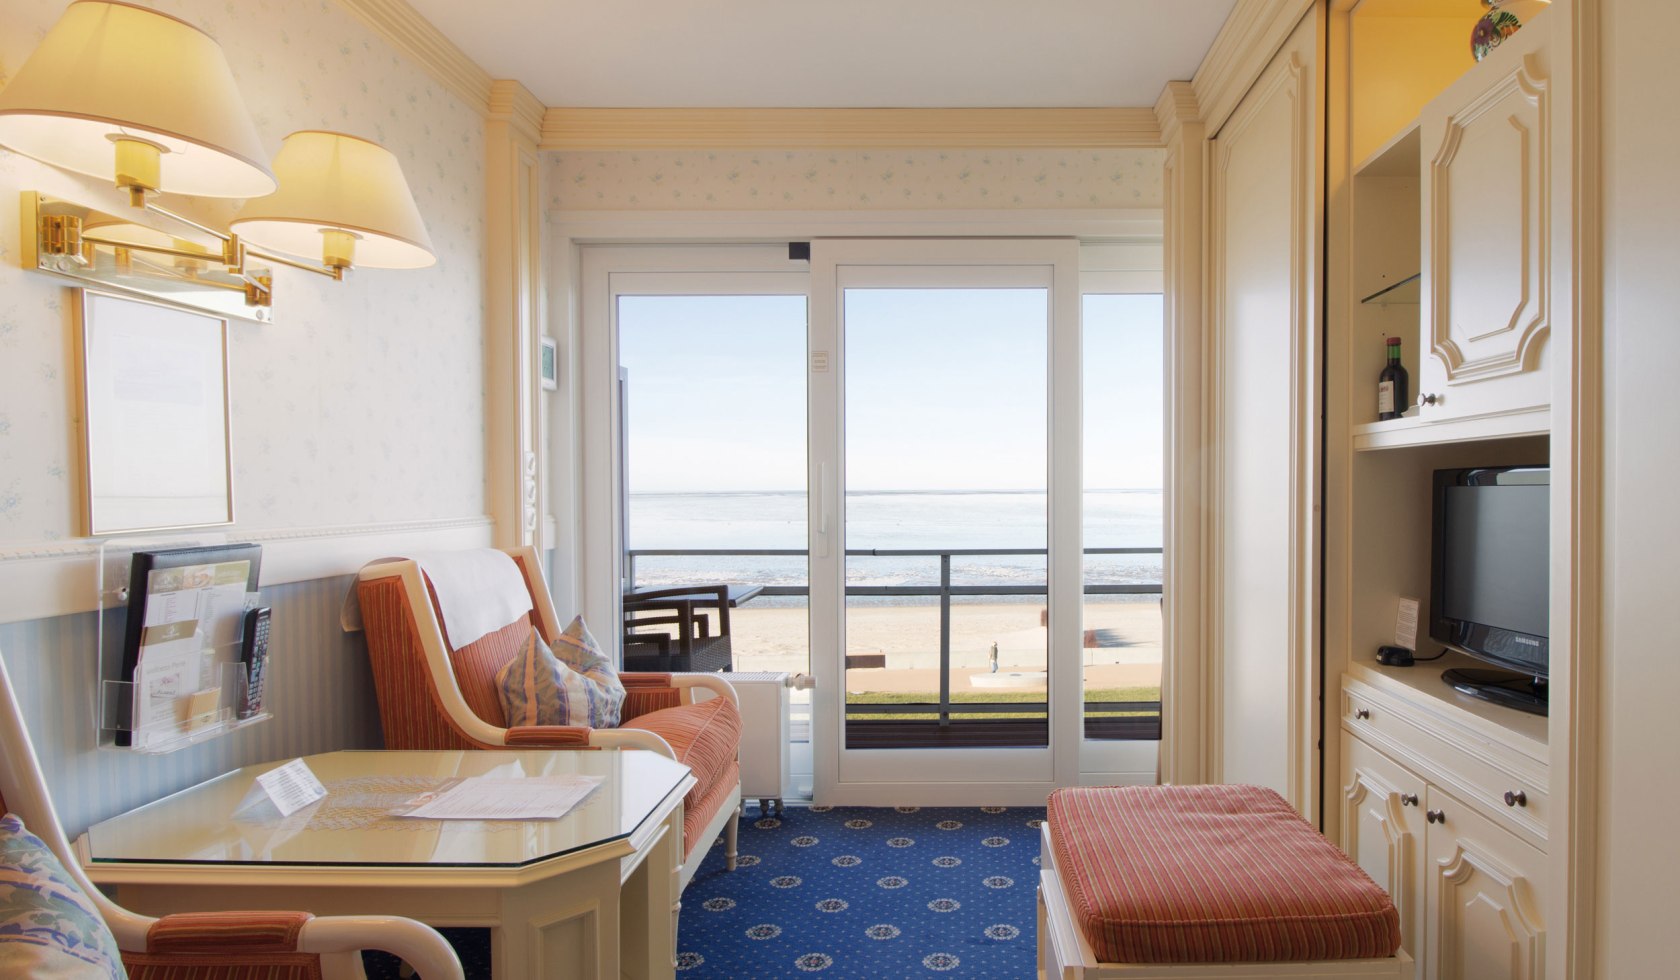 Hotelzimmer im Hotel Strandperle mit Meerblick, © Hotel Strandperle / Voxel Design